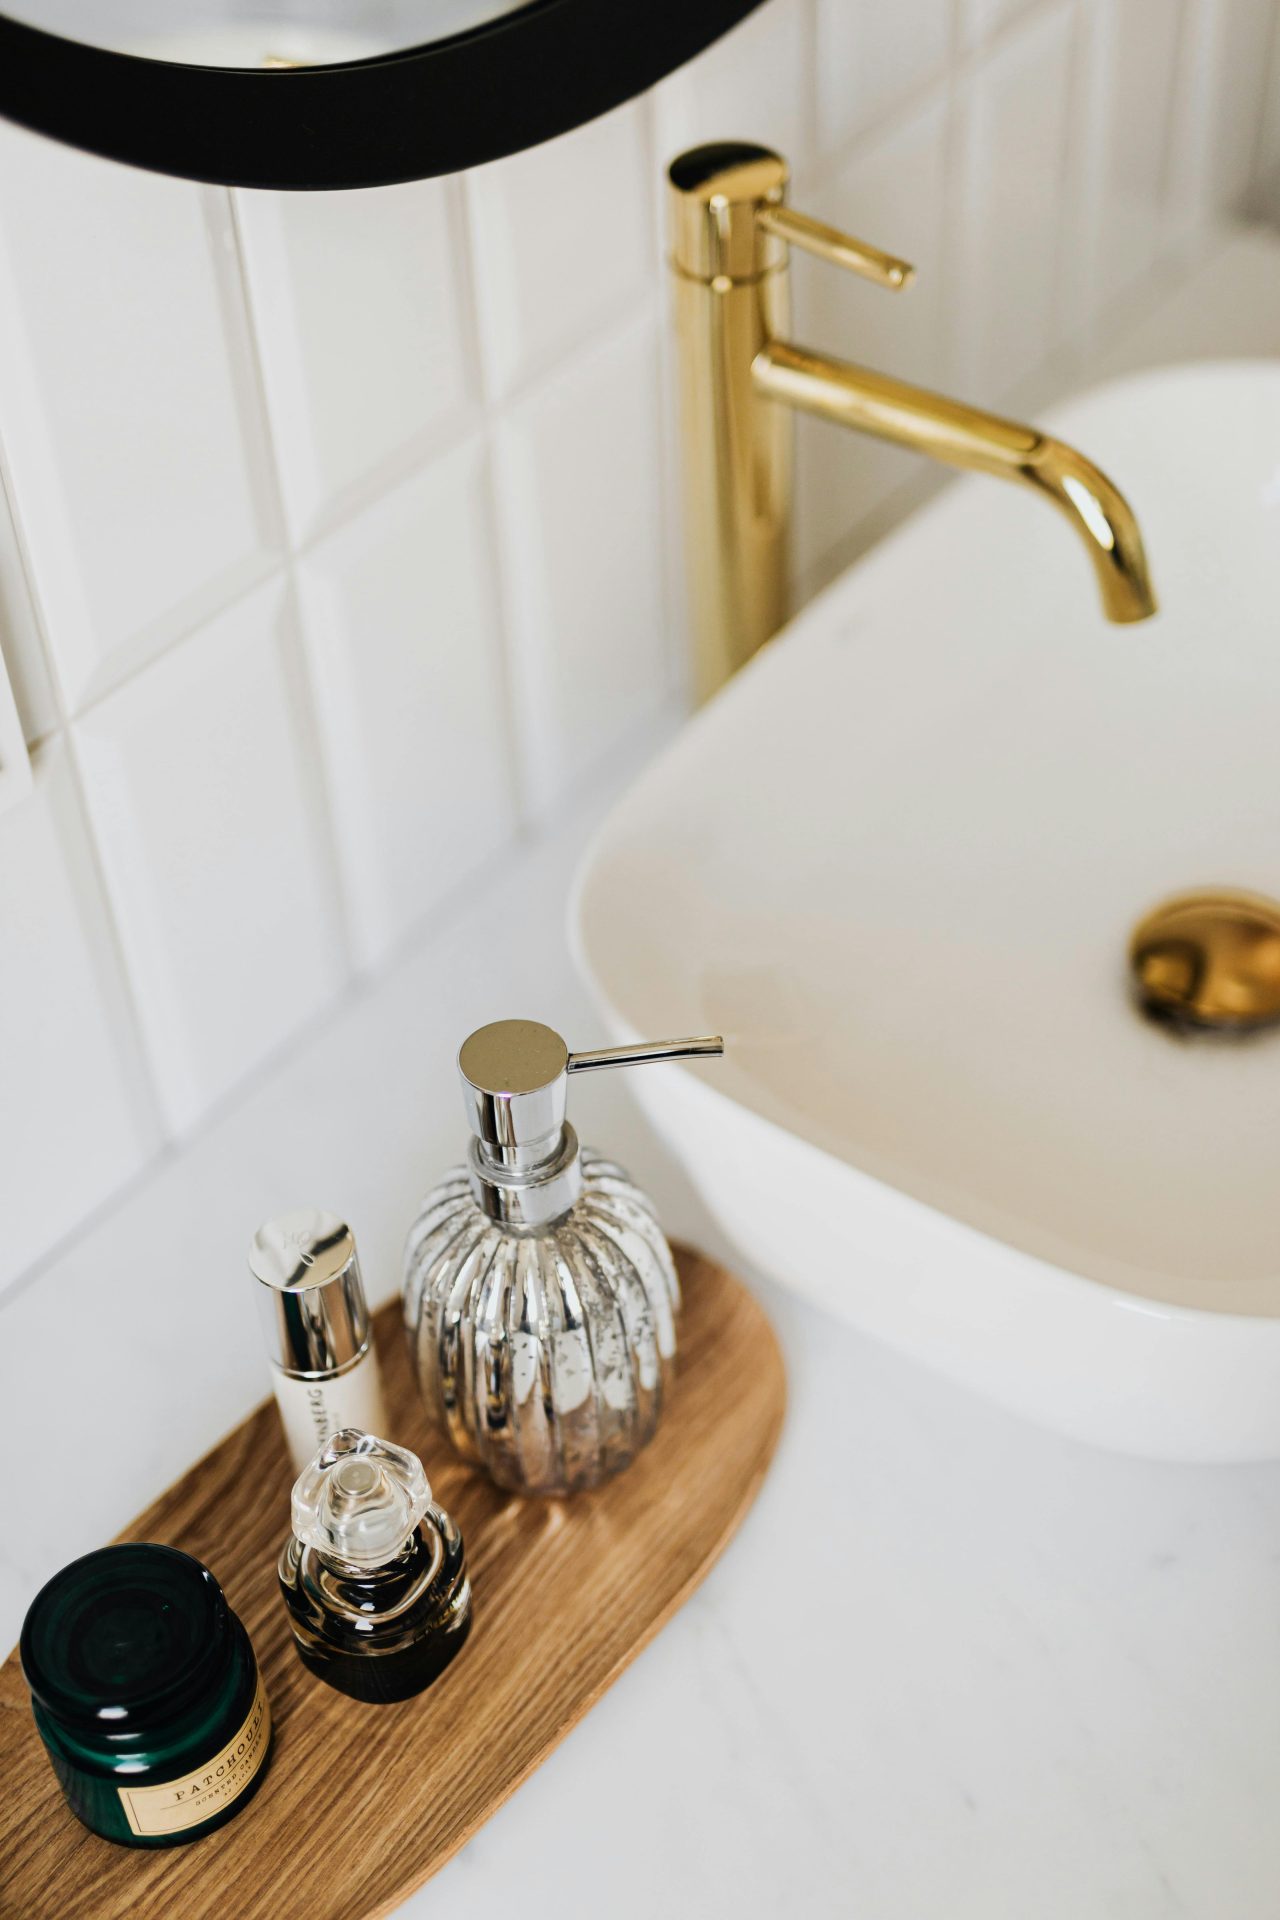 Benefits of Upgrading Your Bathroom Sink